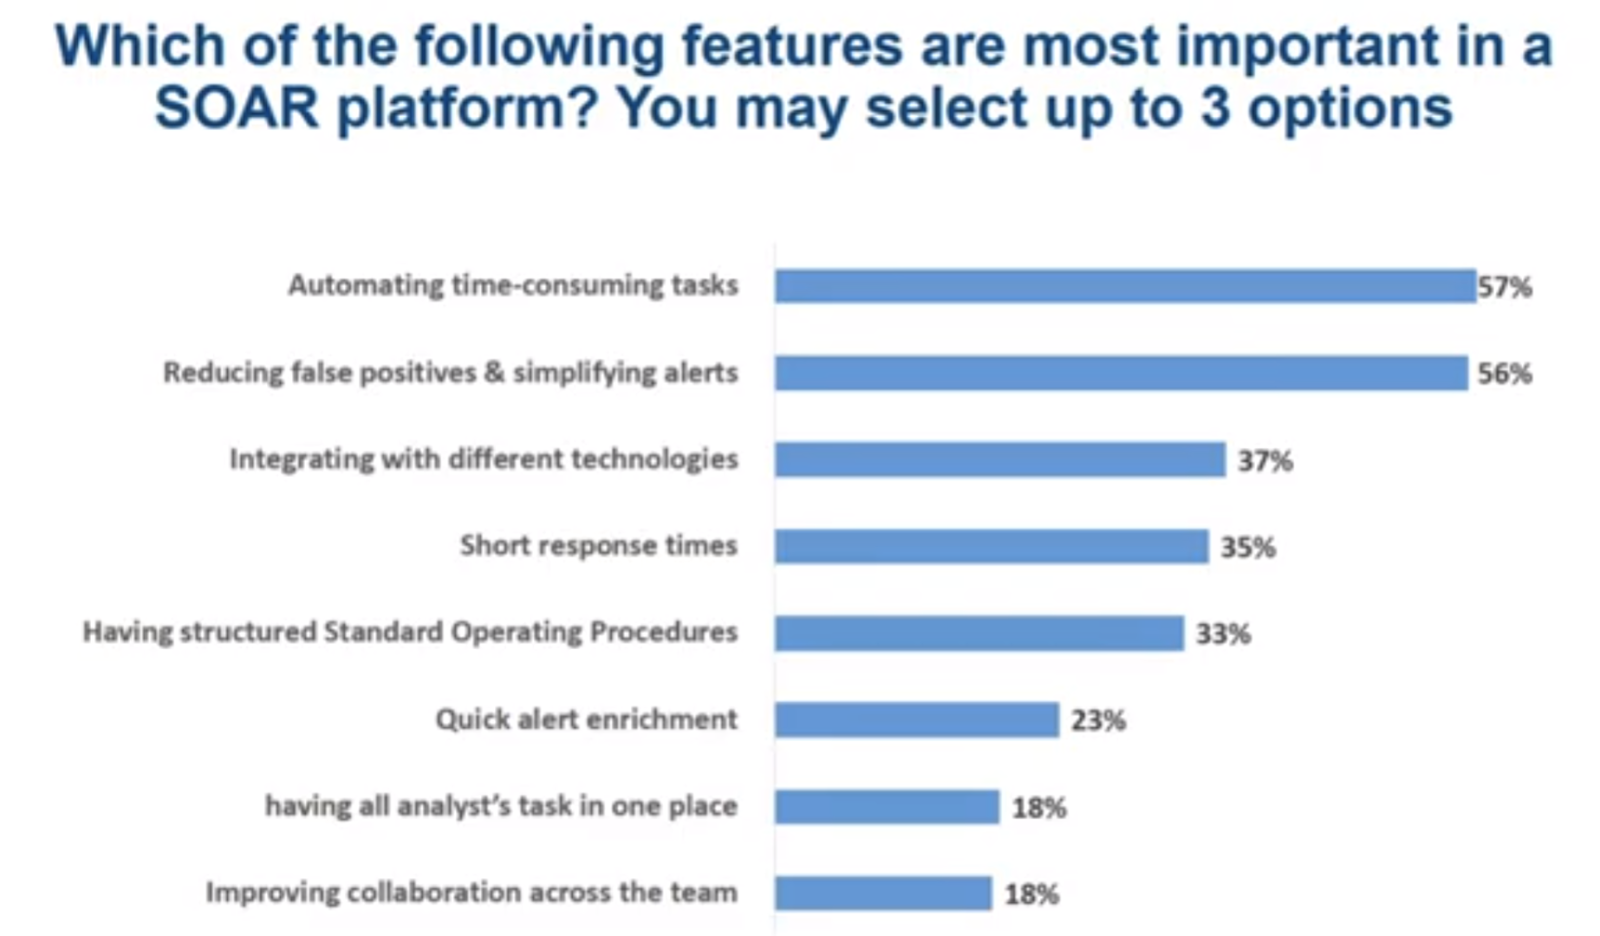 Most important SOAR platform features poll